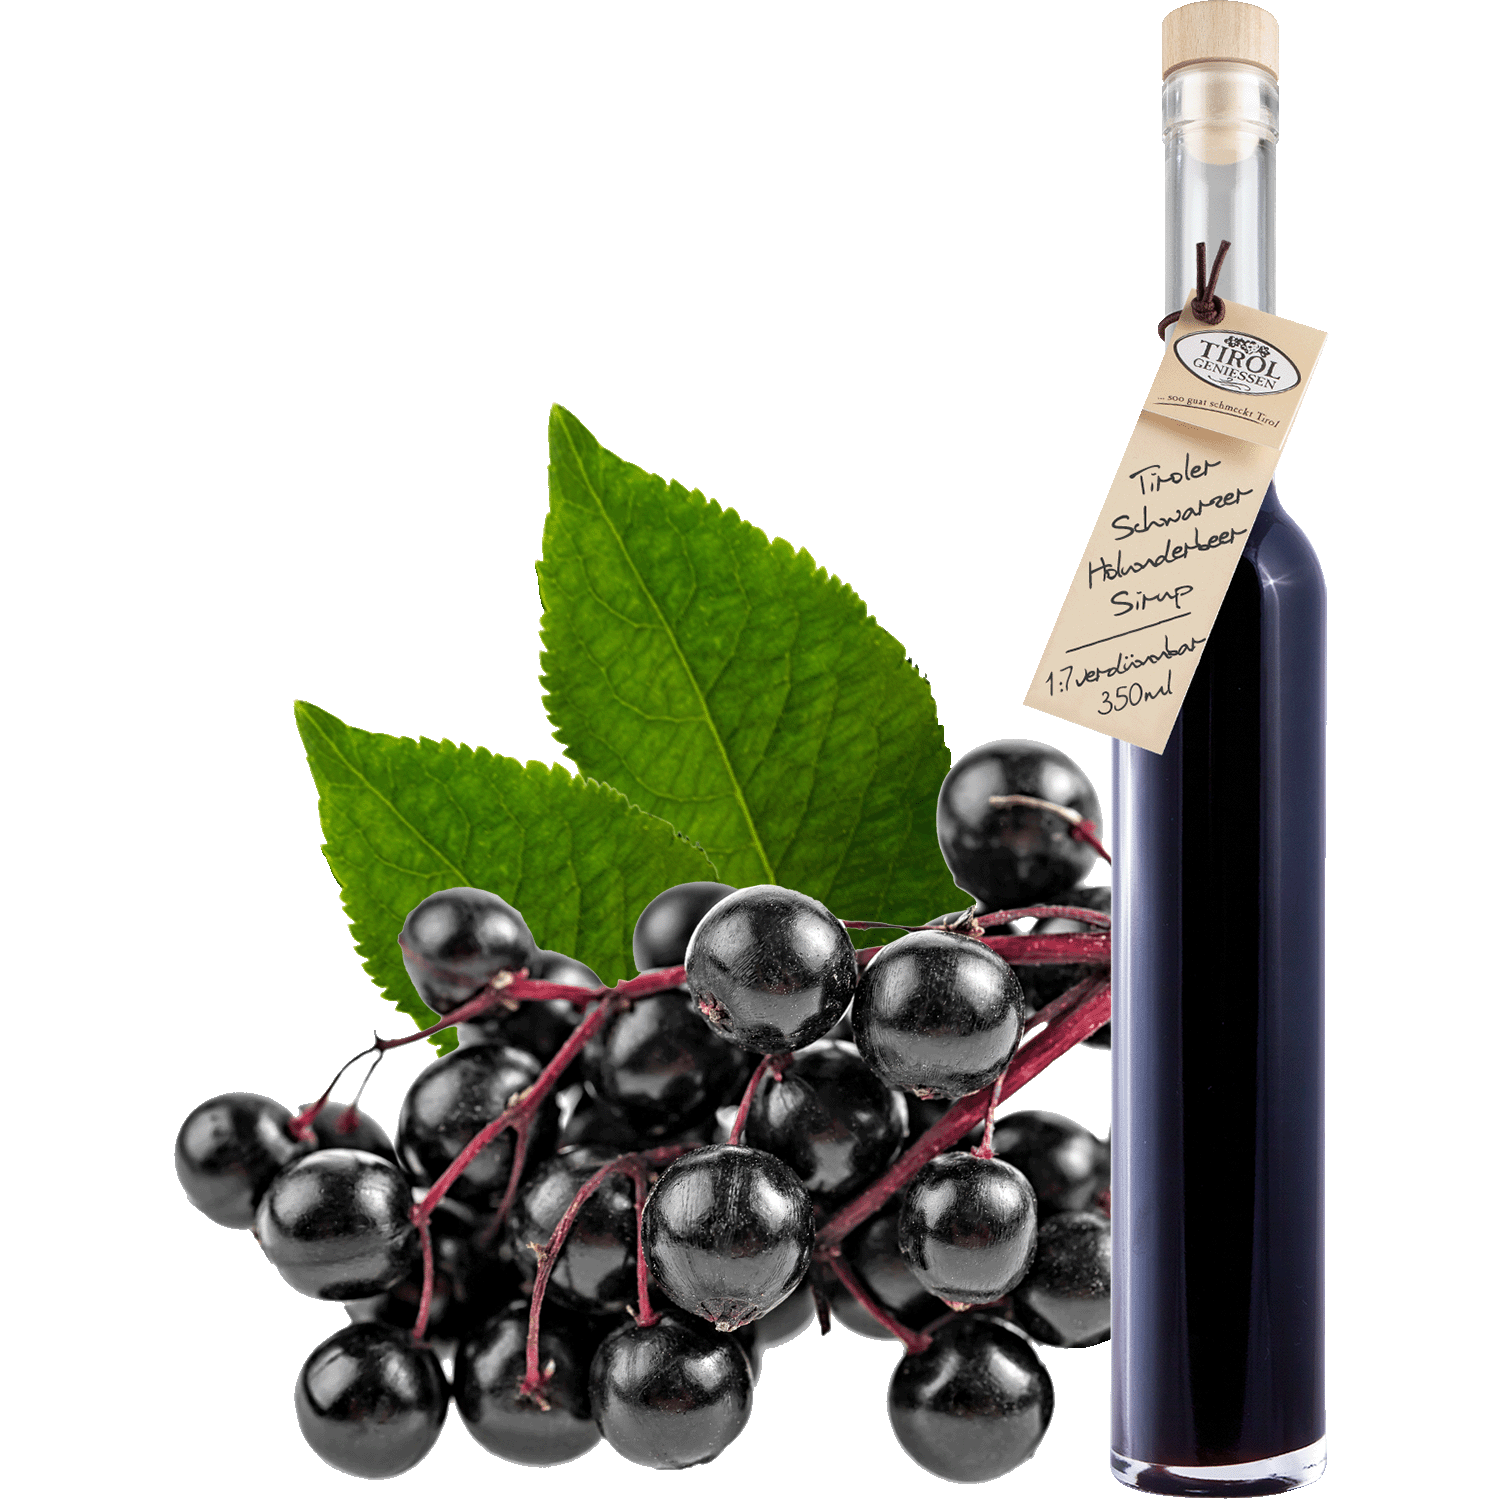 Black Elderberry Syrup in gift bottle from Austria from Tirol Geniessen